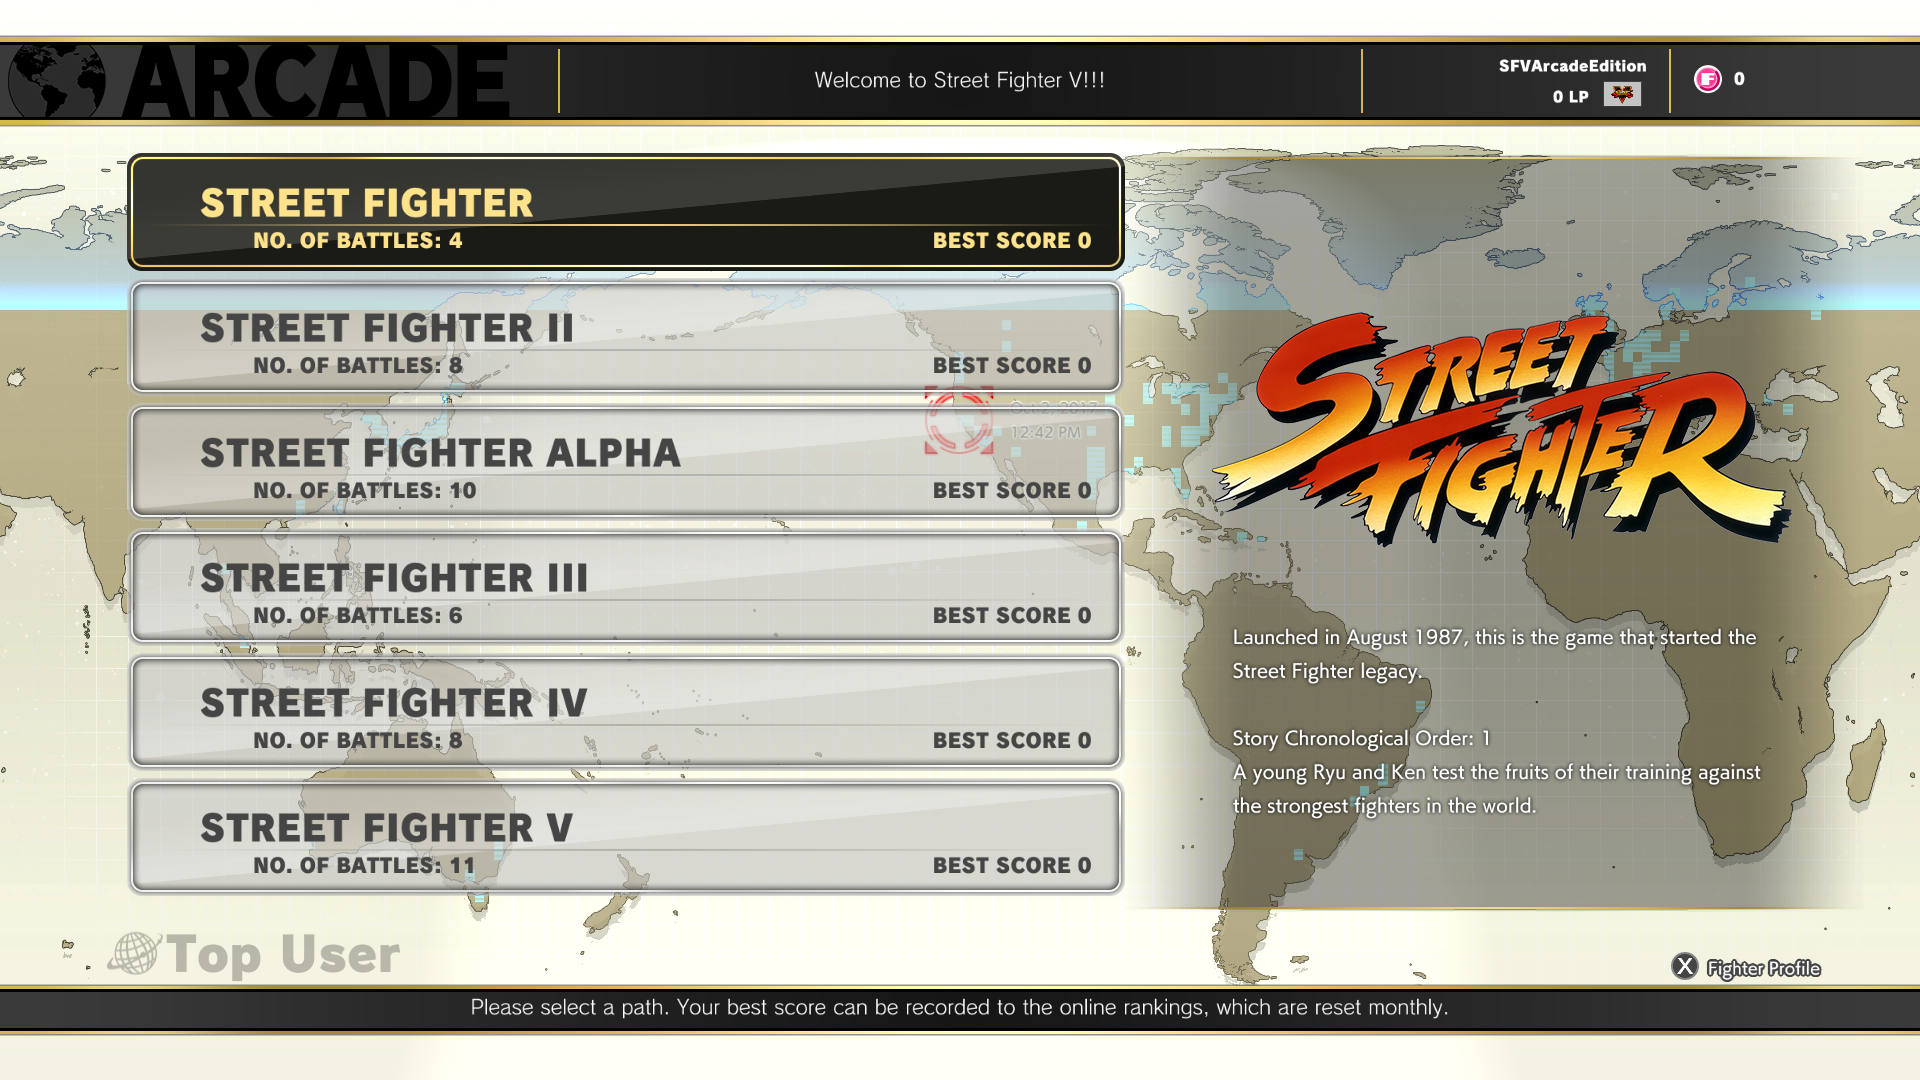 BLANKA LADDER - The Ultimate Street Fighter 2 Challenge!